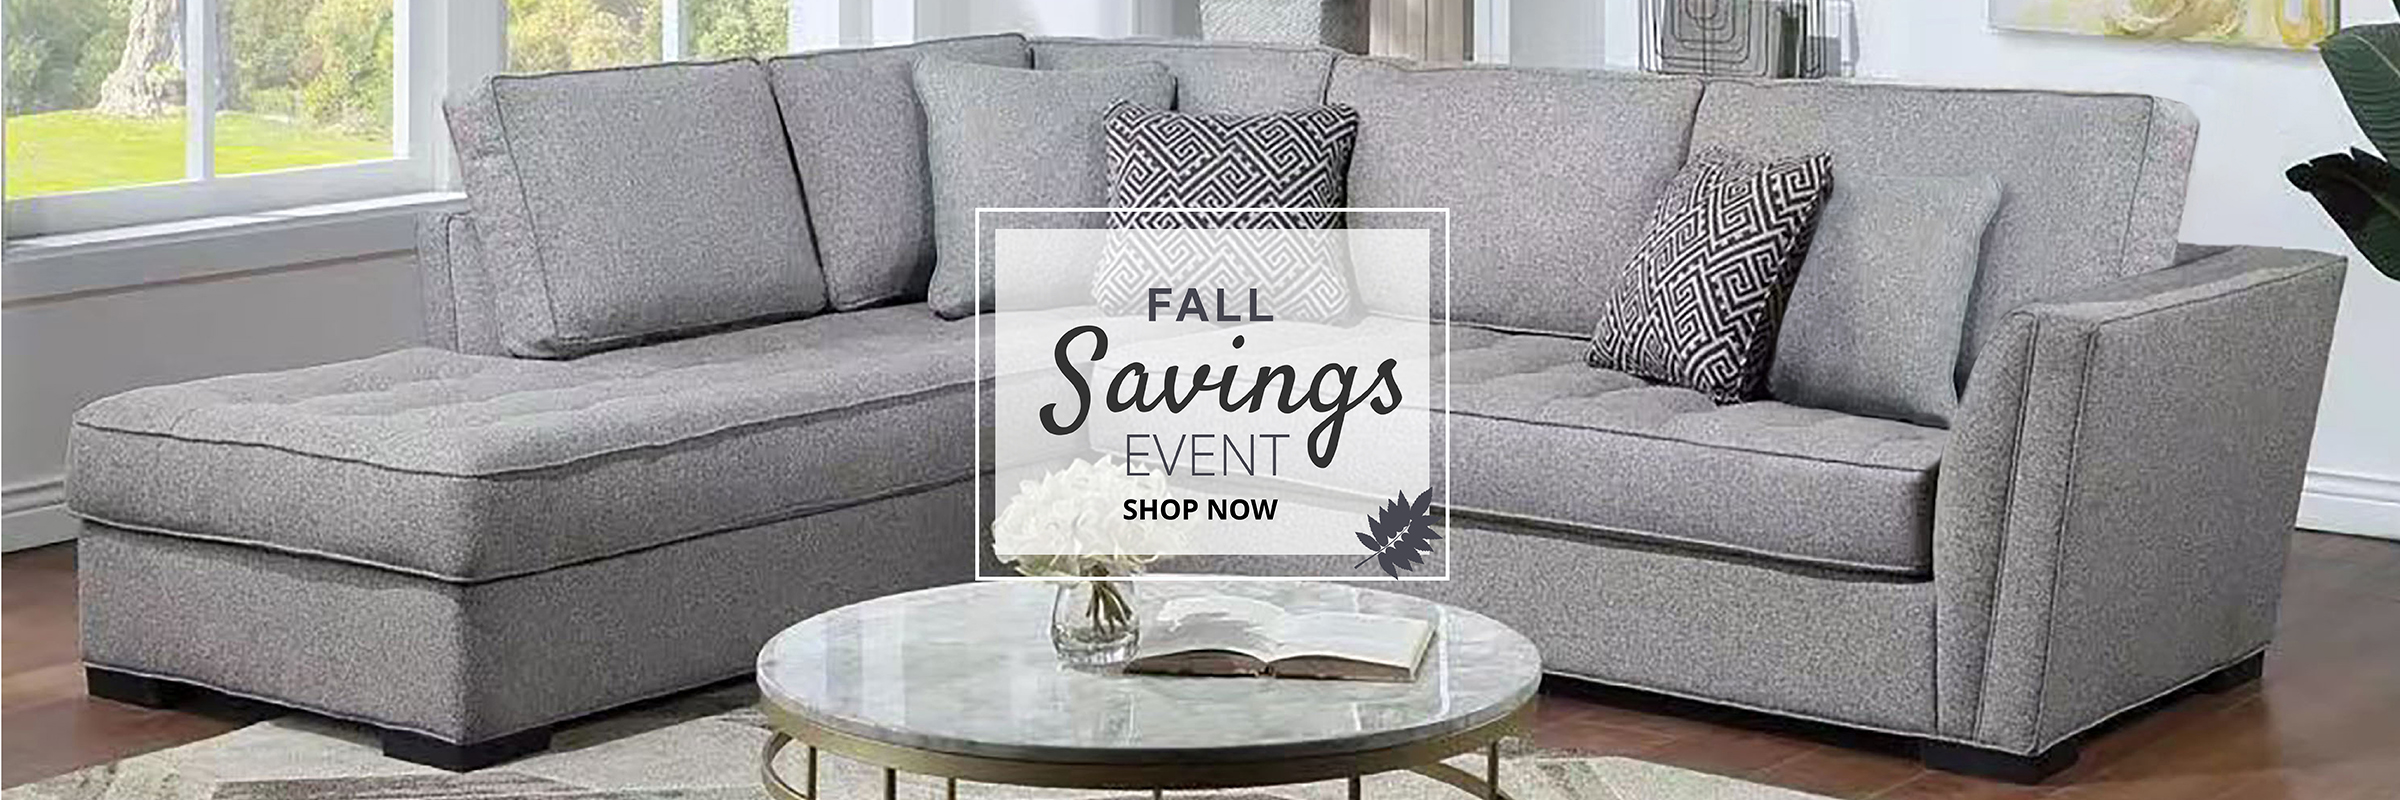 Fall Savings Sale